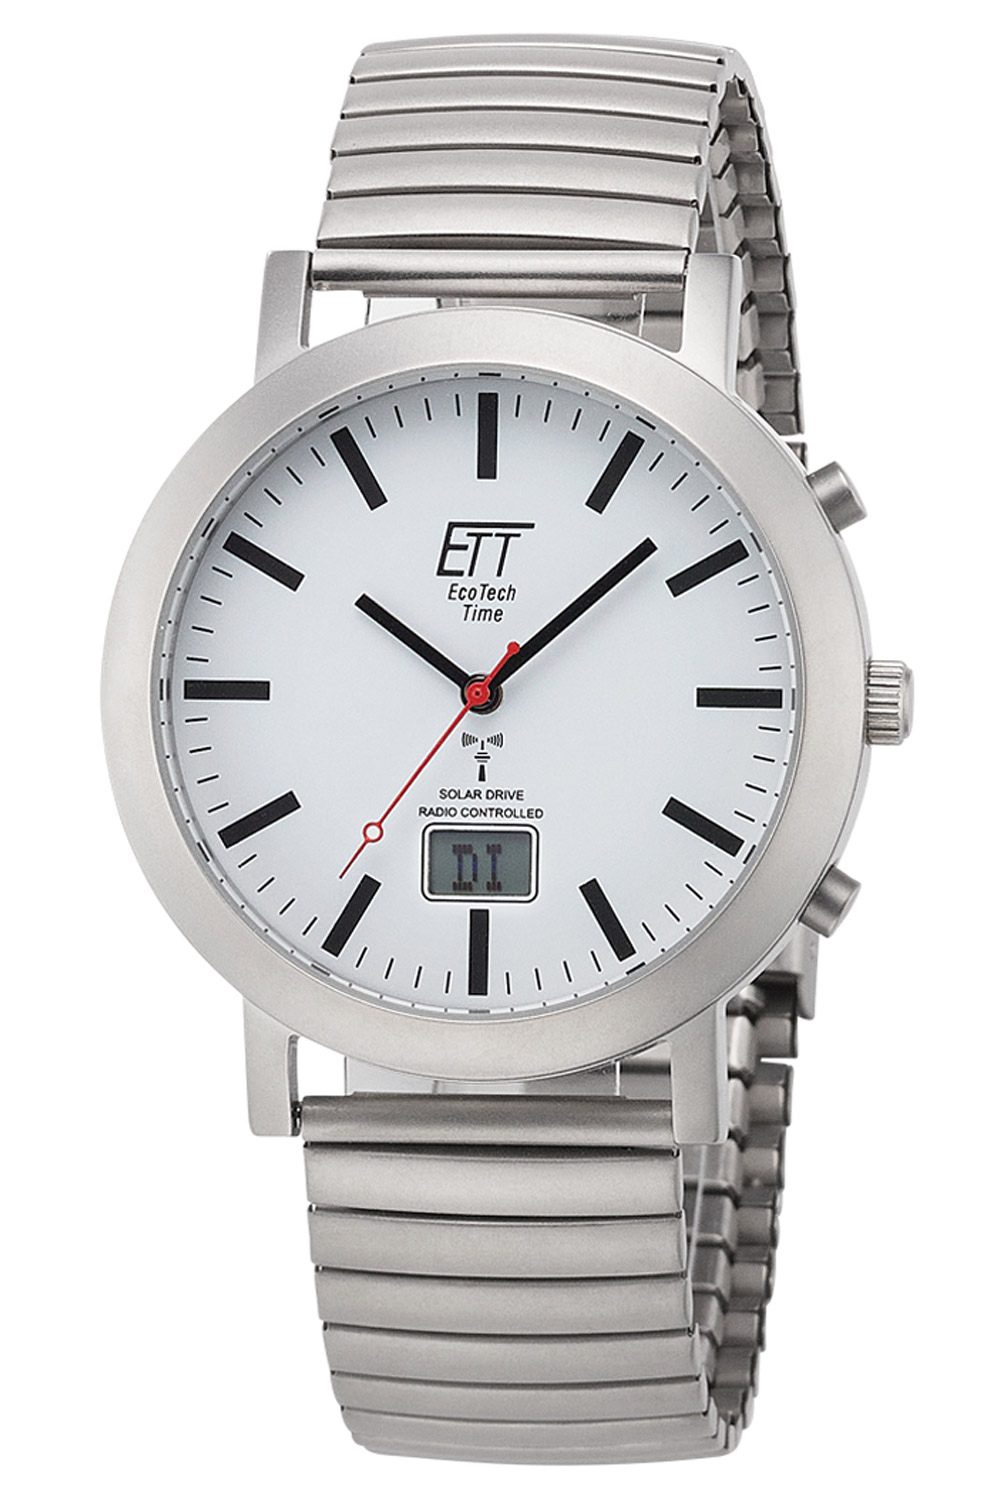 EGS-11580-11M Funk-Solar ETT Herren-Armbanduhr mit Zugband Station Tech • Time Eco uhrcenter Watch